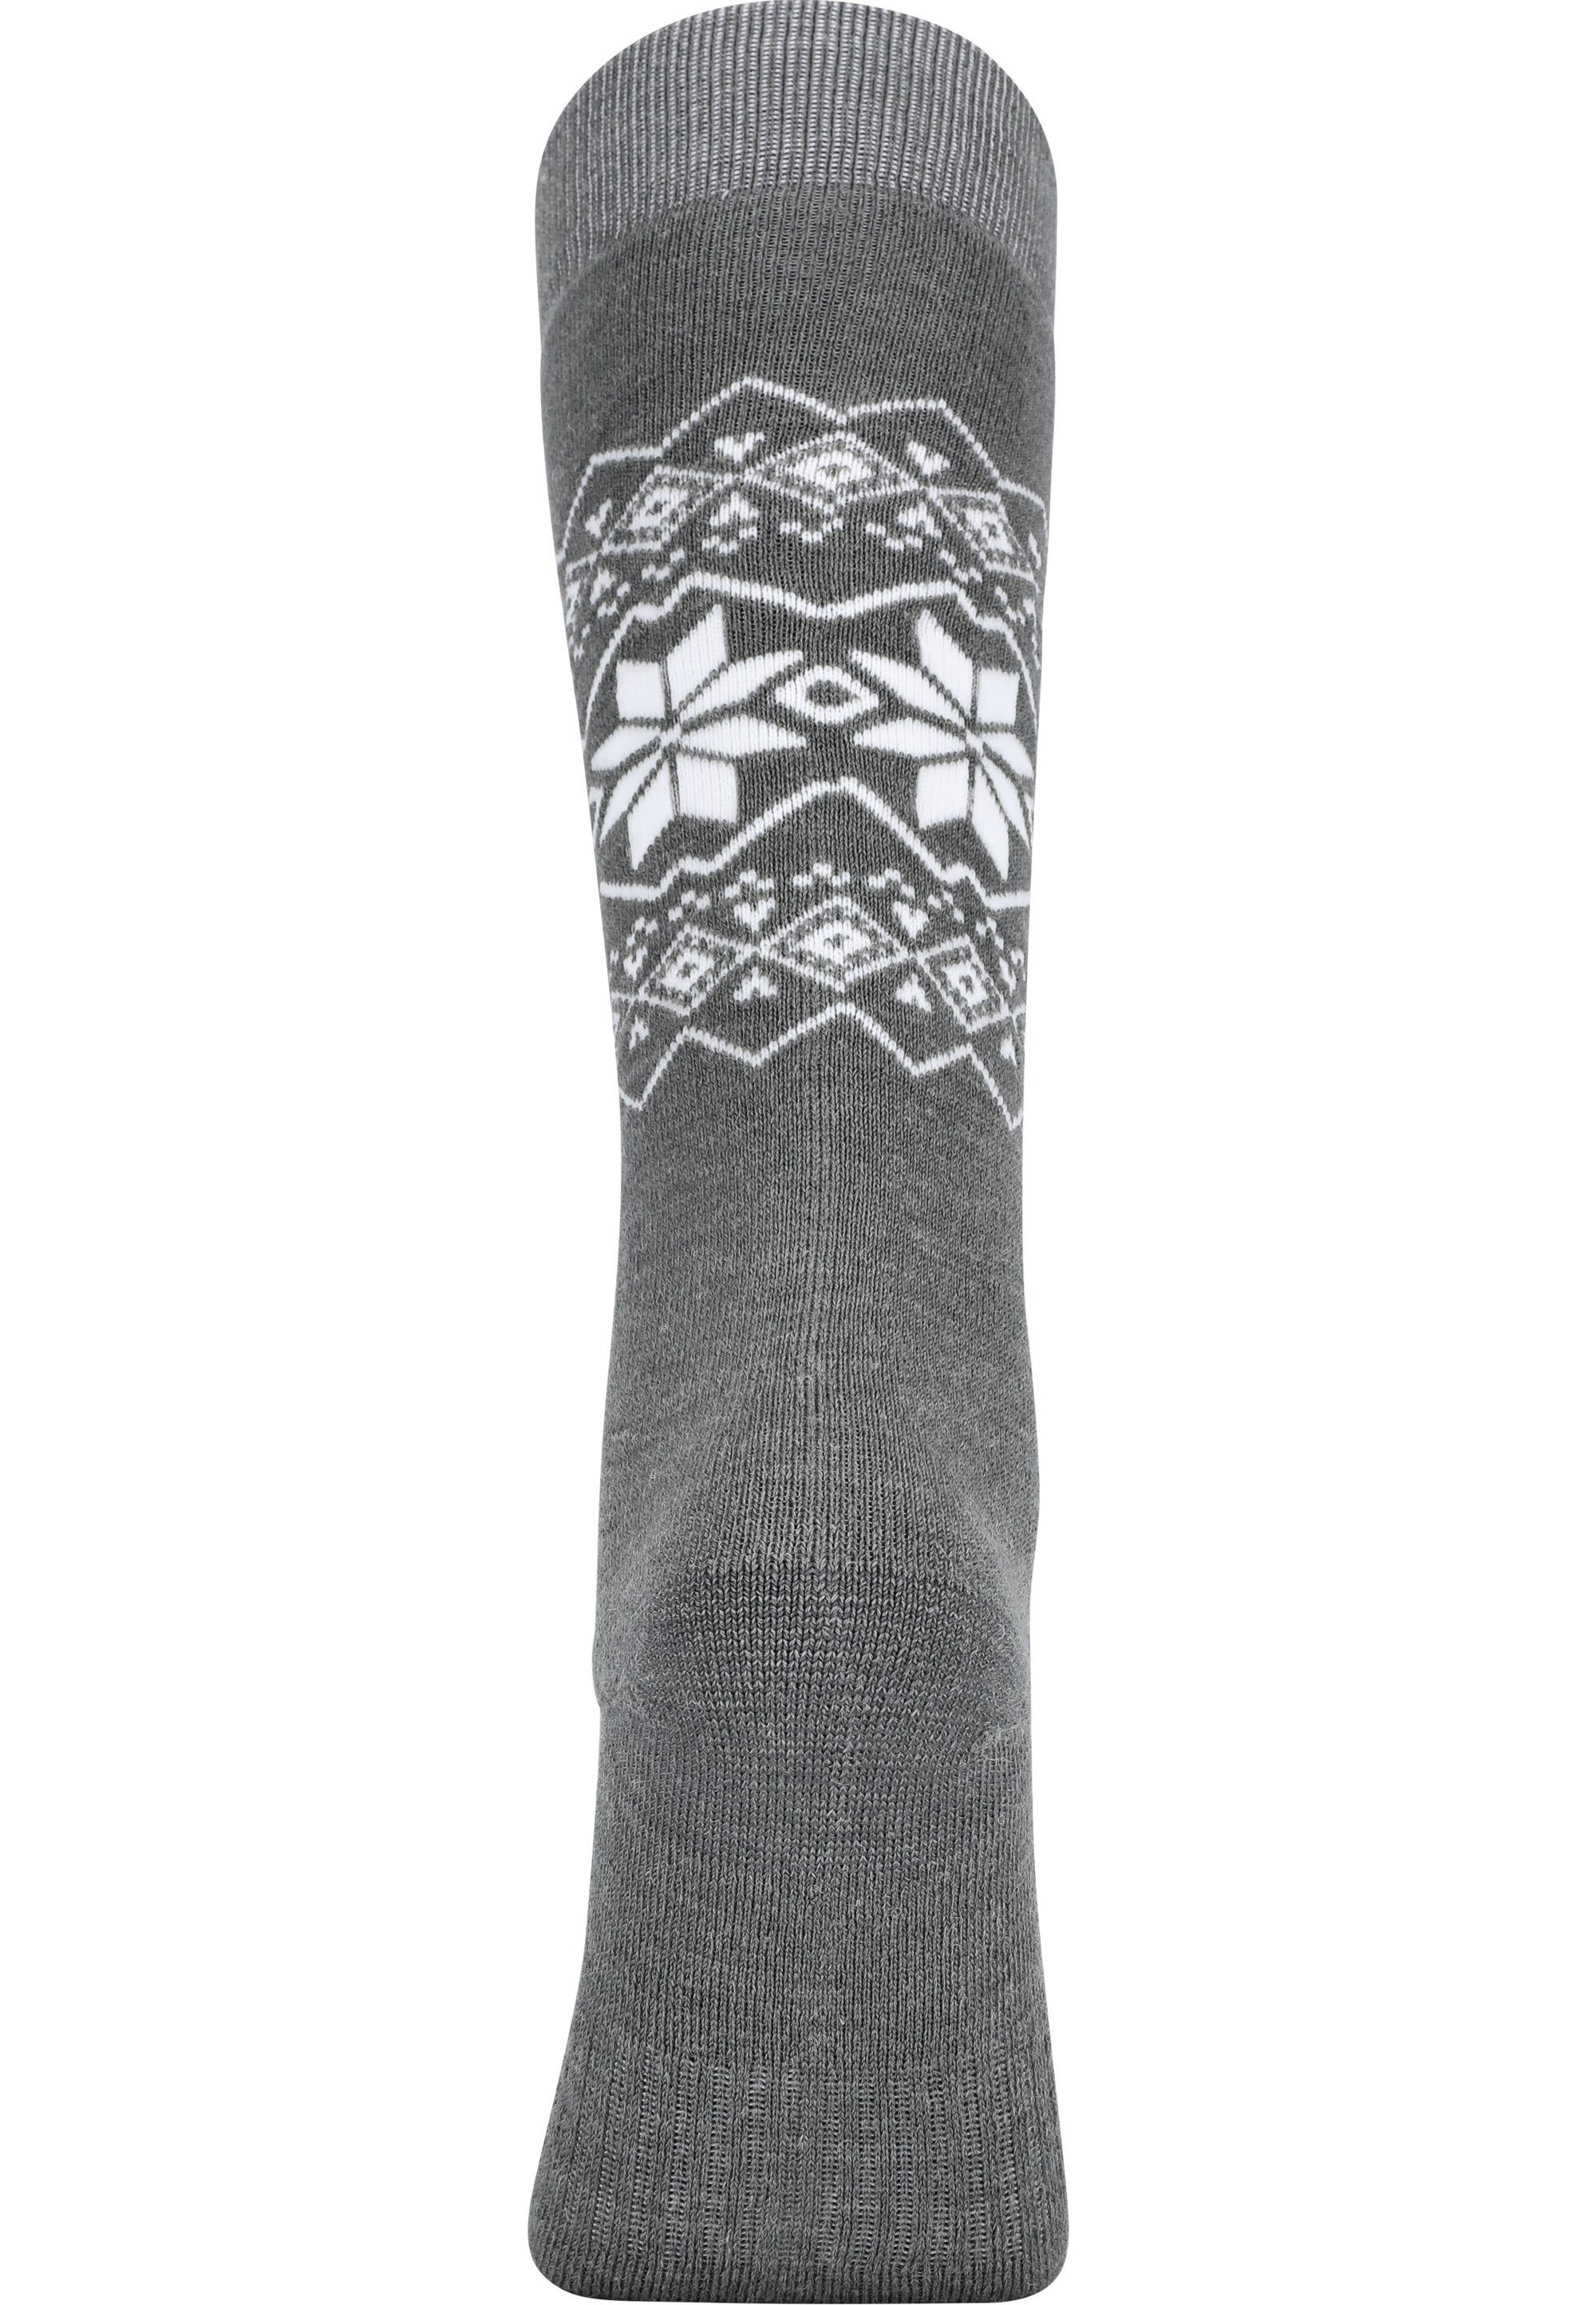 ENDURANCE Socken grau mit Jacquard-Muster Ossar (1-Paar) trendigem